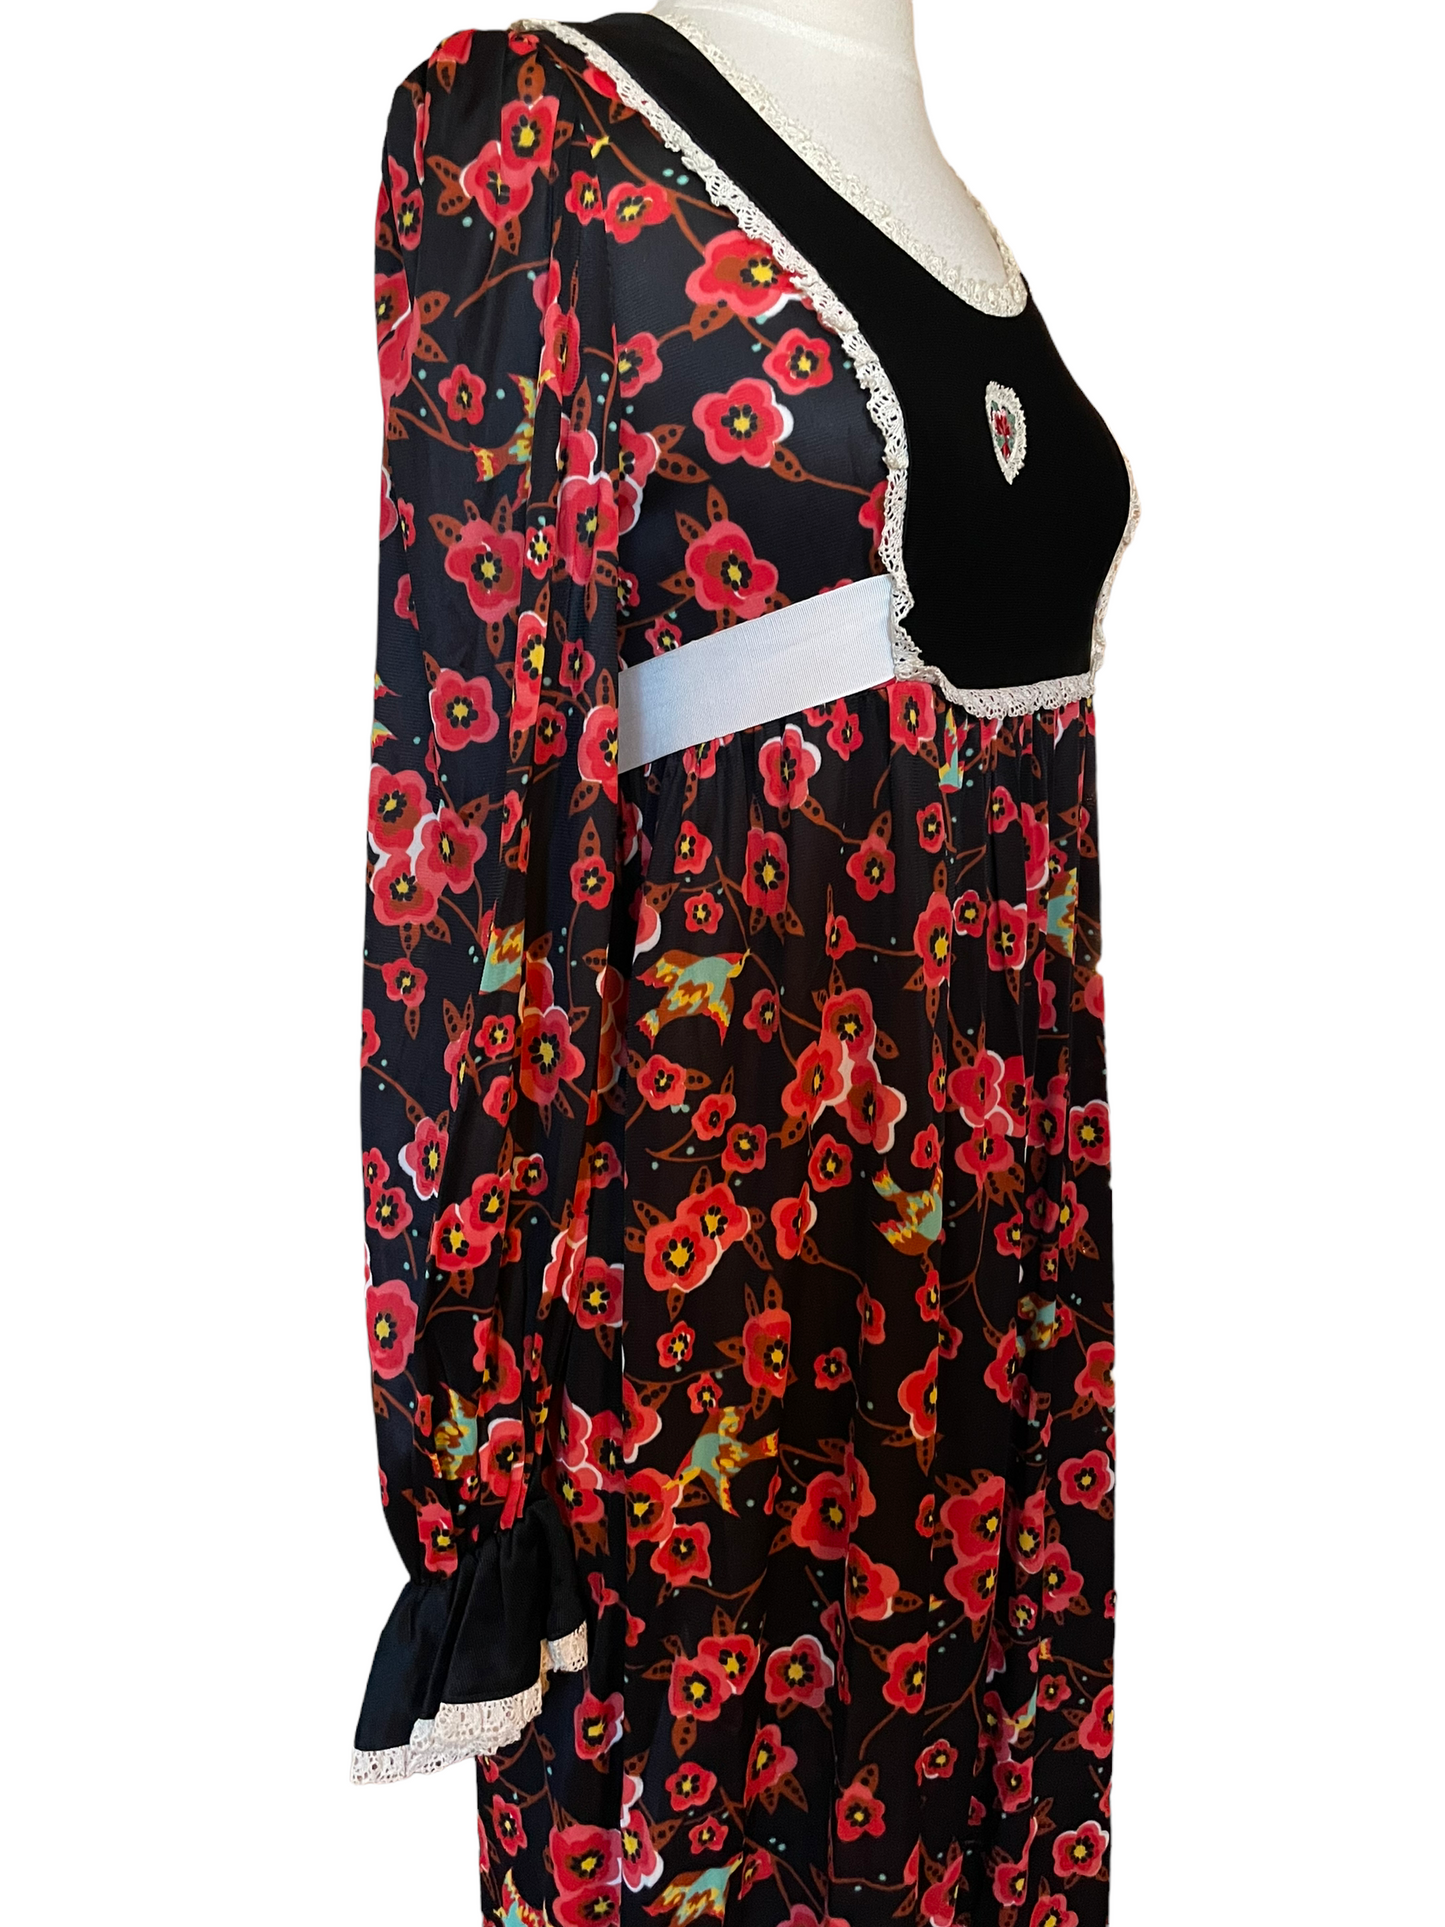 Vintage 1960s Cherry Blossom Maxi Dress SZ S-M |  Barn Owl Vintage | Seattle Vintage Dresses Right side view.